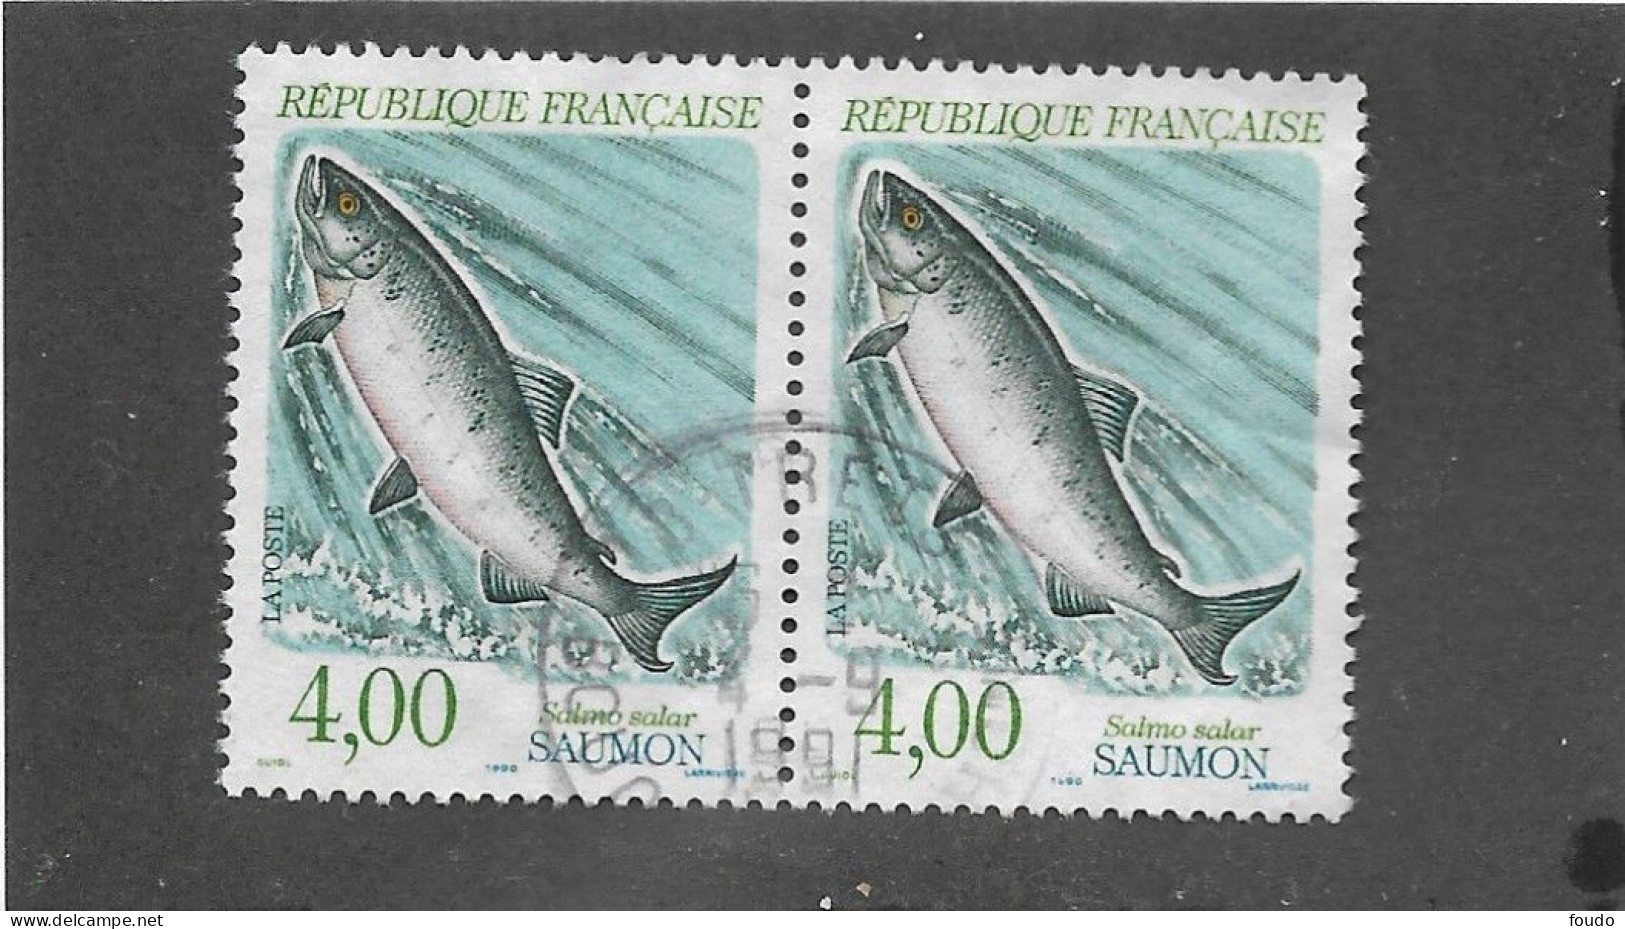 FRANCE 1990 -  N°YT 2665 - Used Stamps